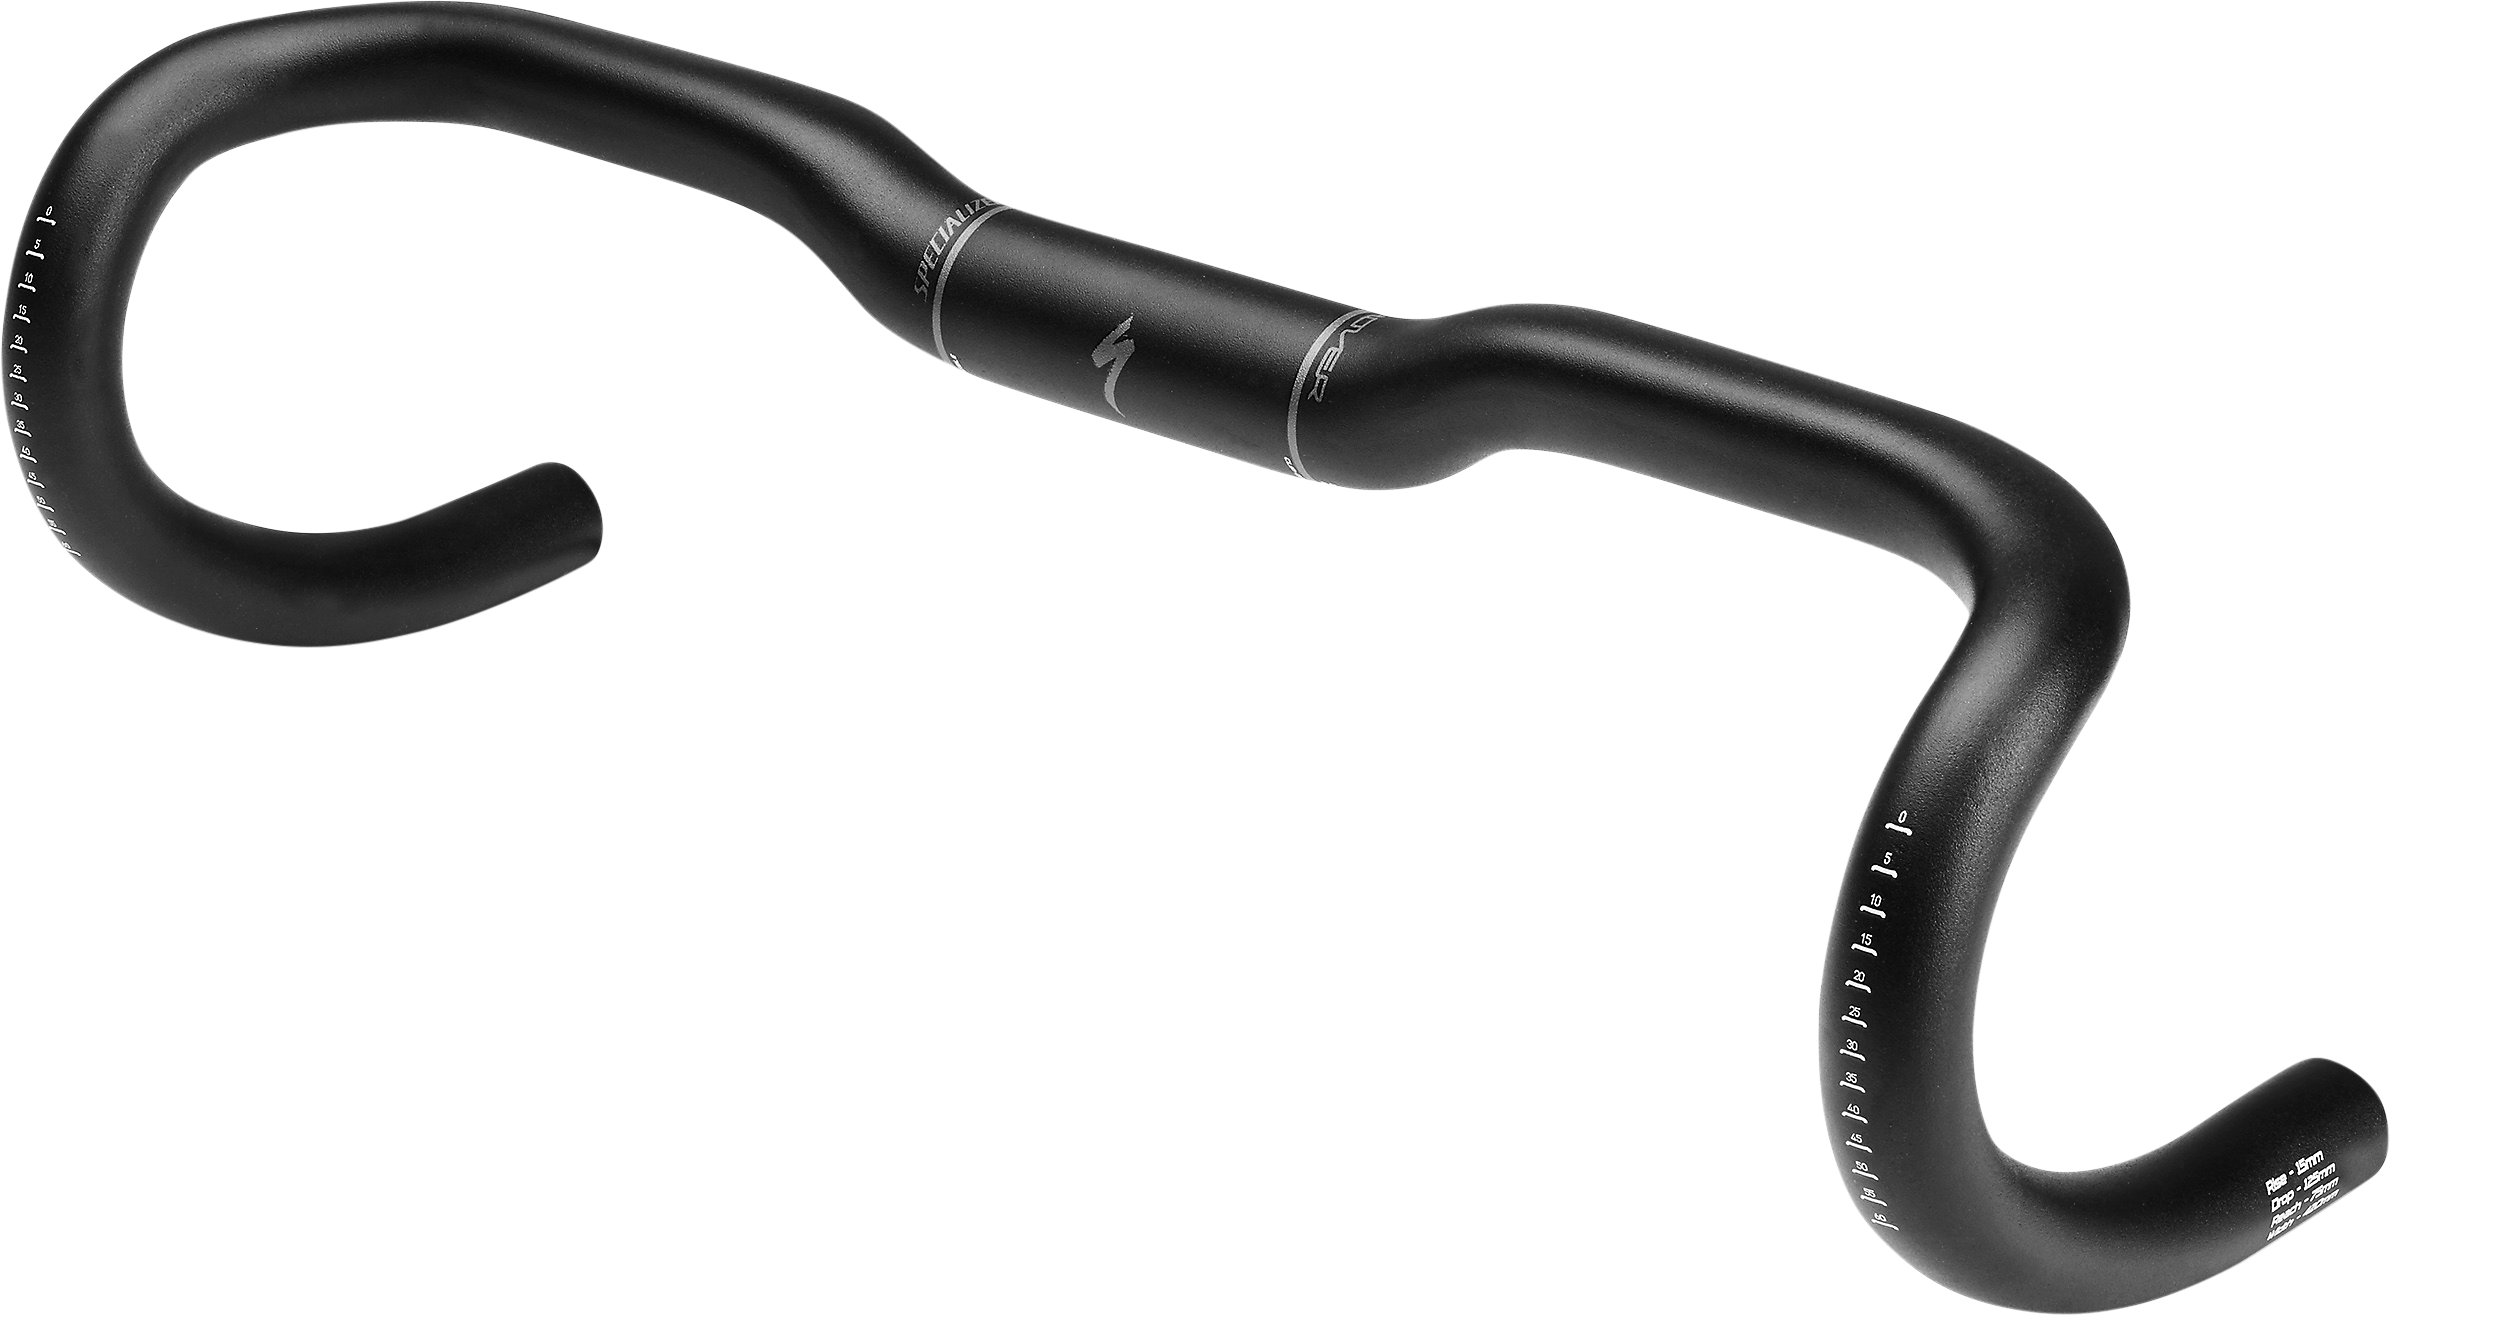 specialized bike handlebars